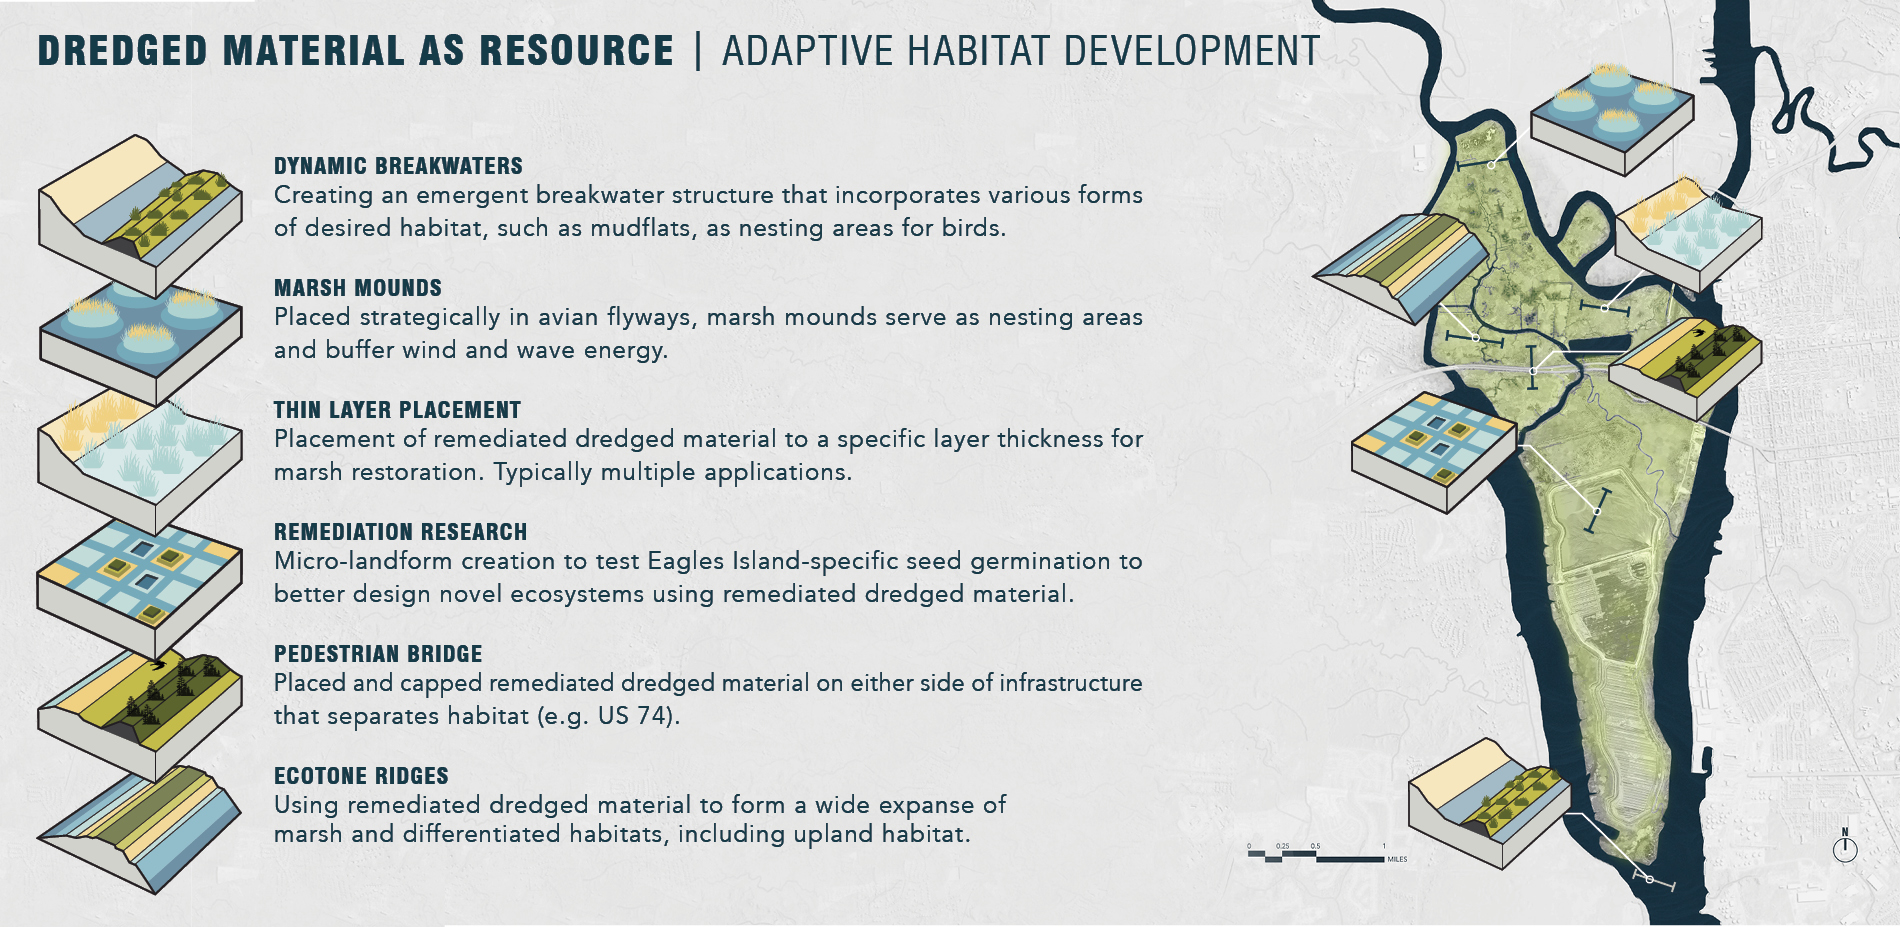 Adaptive Habitat Development with Dredged Material